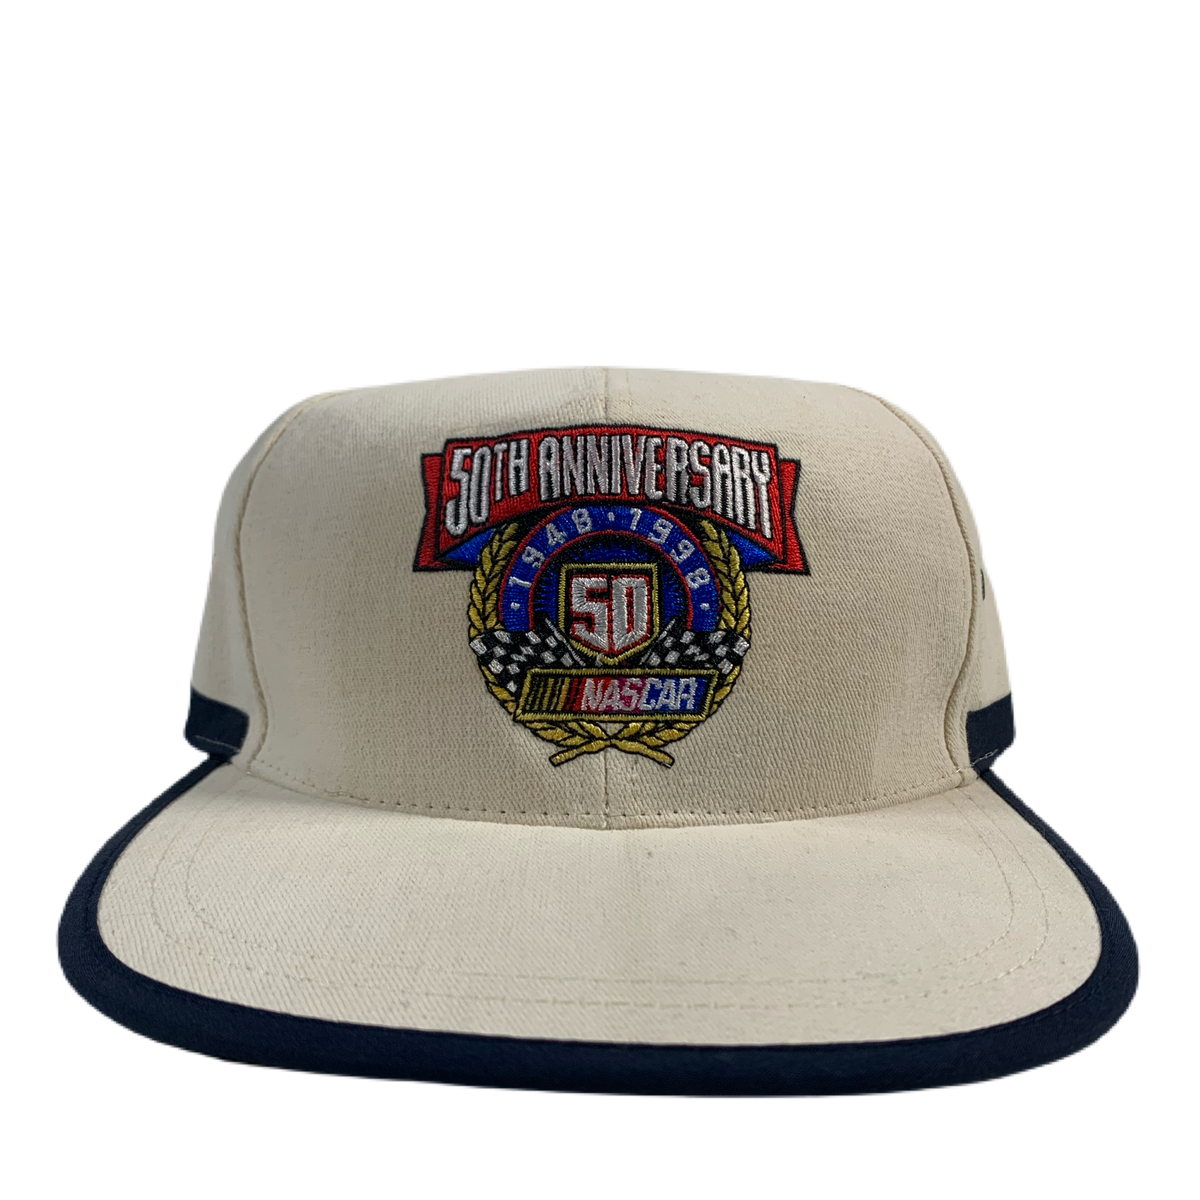 Vintage NASCAR “50th Anniversary” Hat